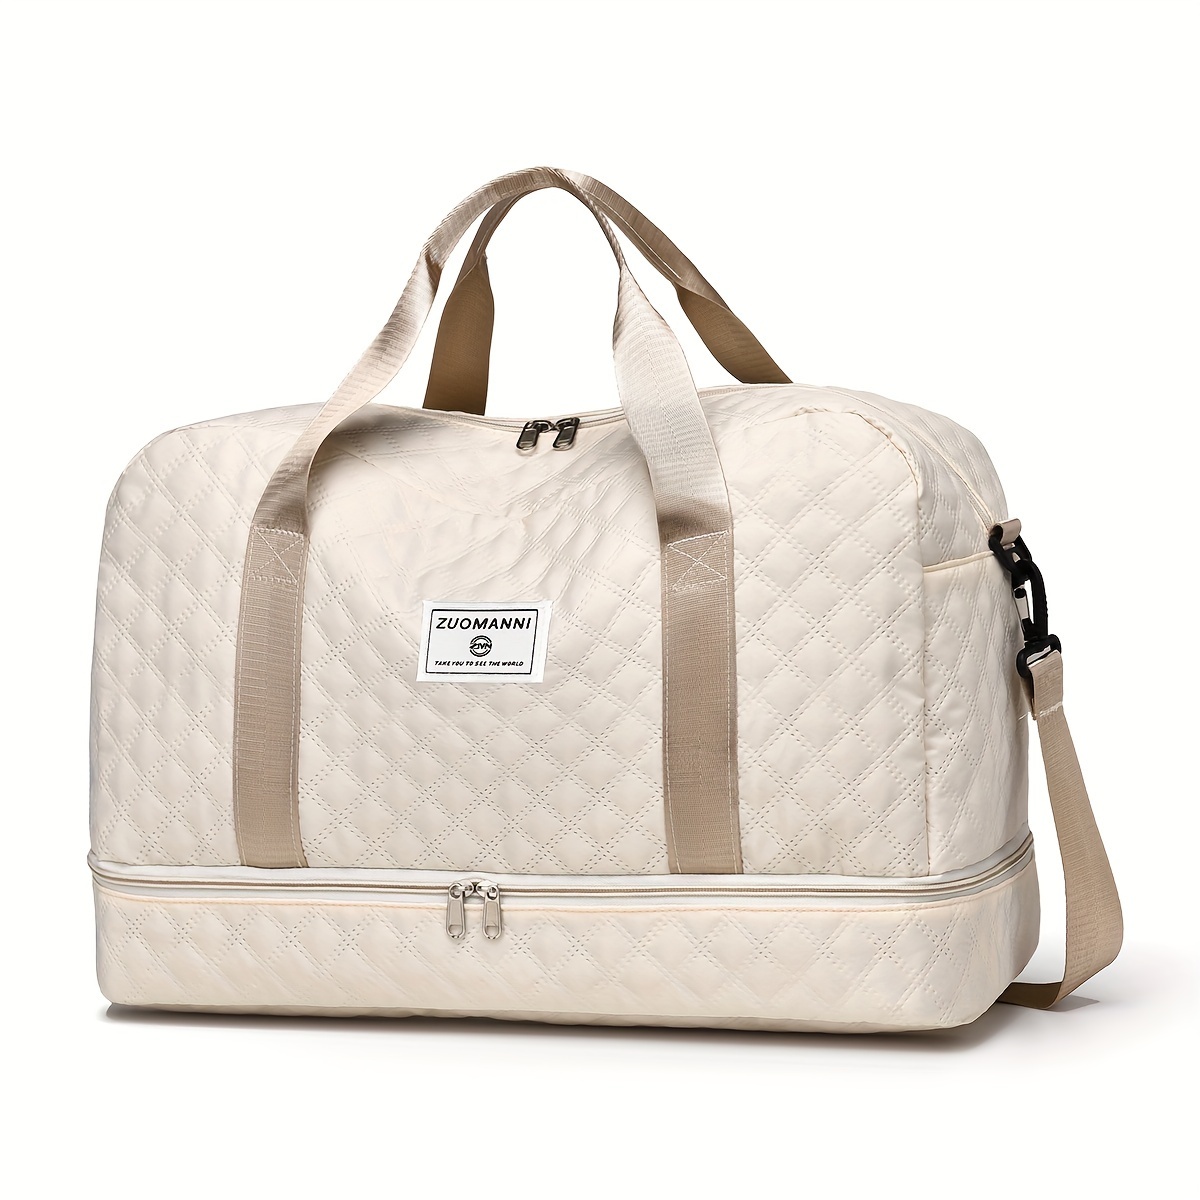 lightweight argyle pattern luggage bag large capacity travel duffle bag portable overnight bag details 24